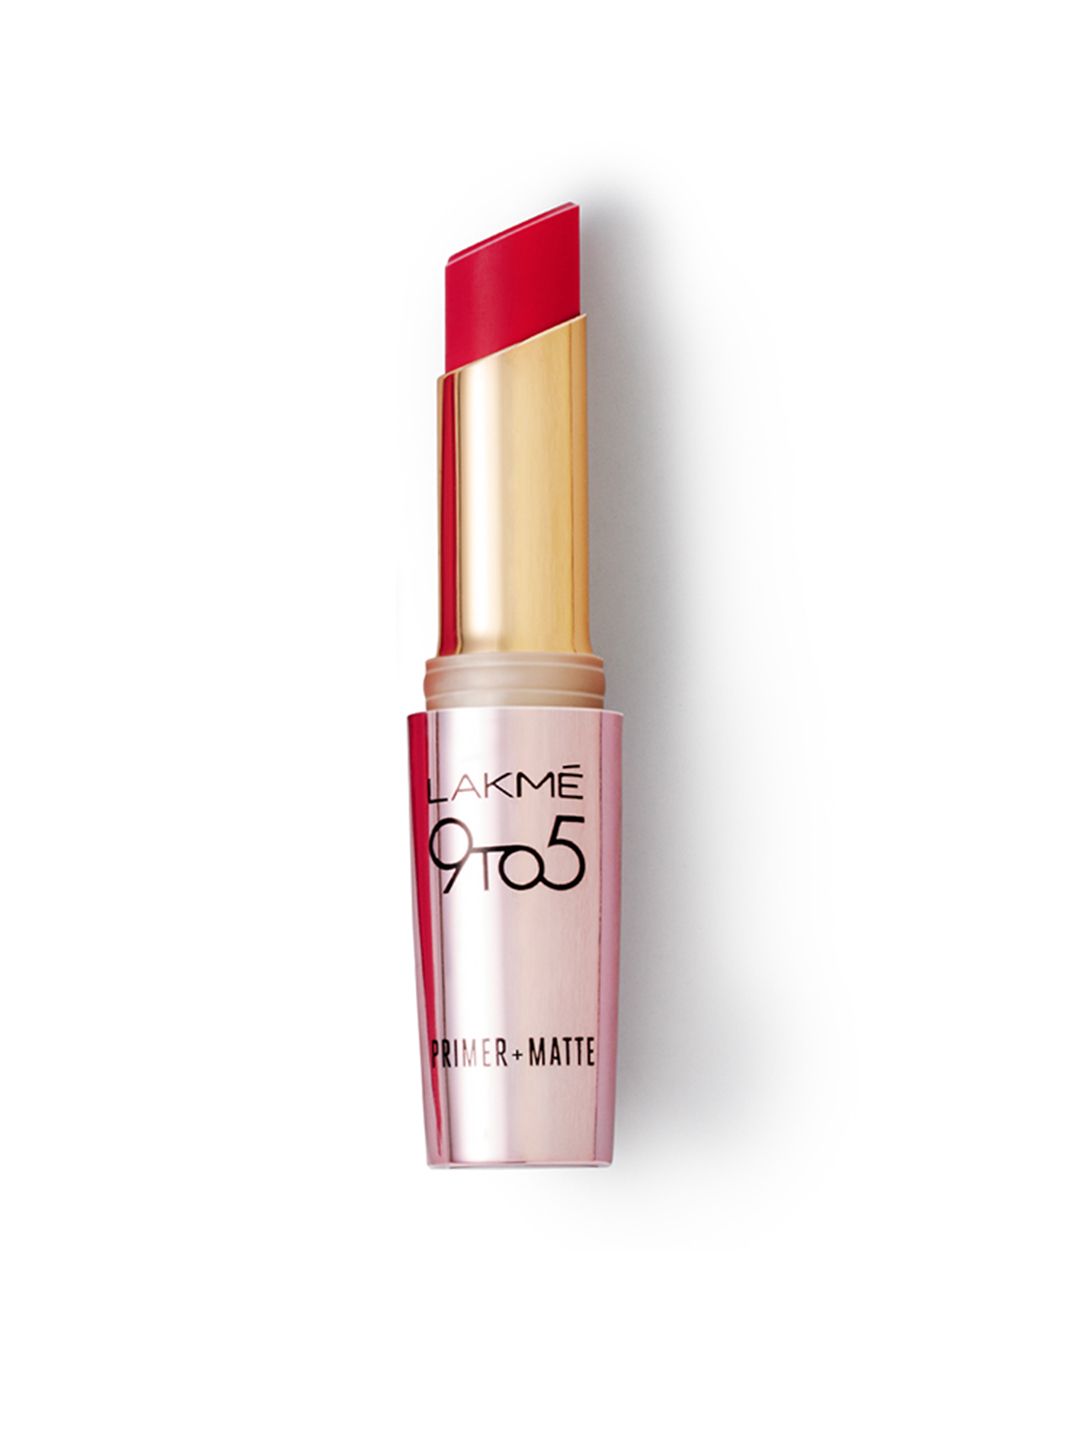 Lakme 9 to 5 Primer + Matte Lipstick-Iconic Red MR 10 Price in India